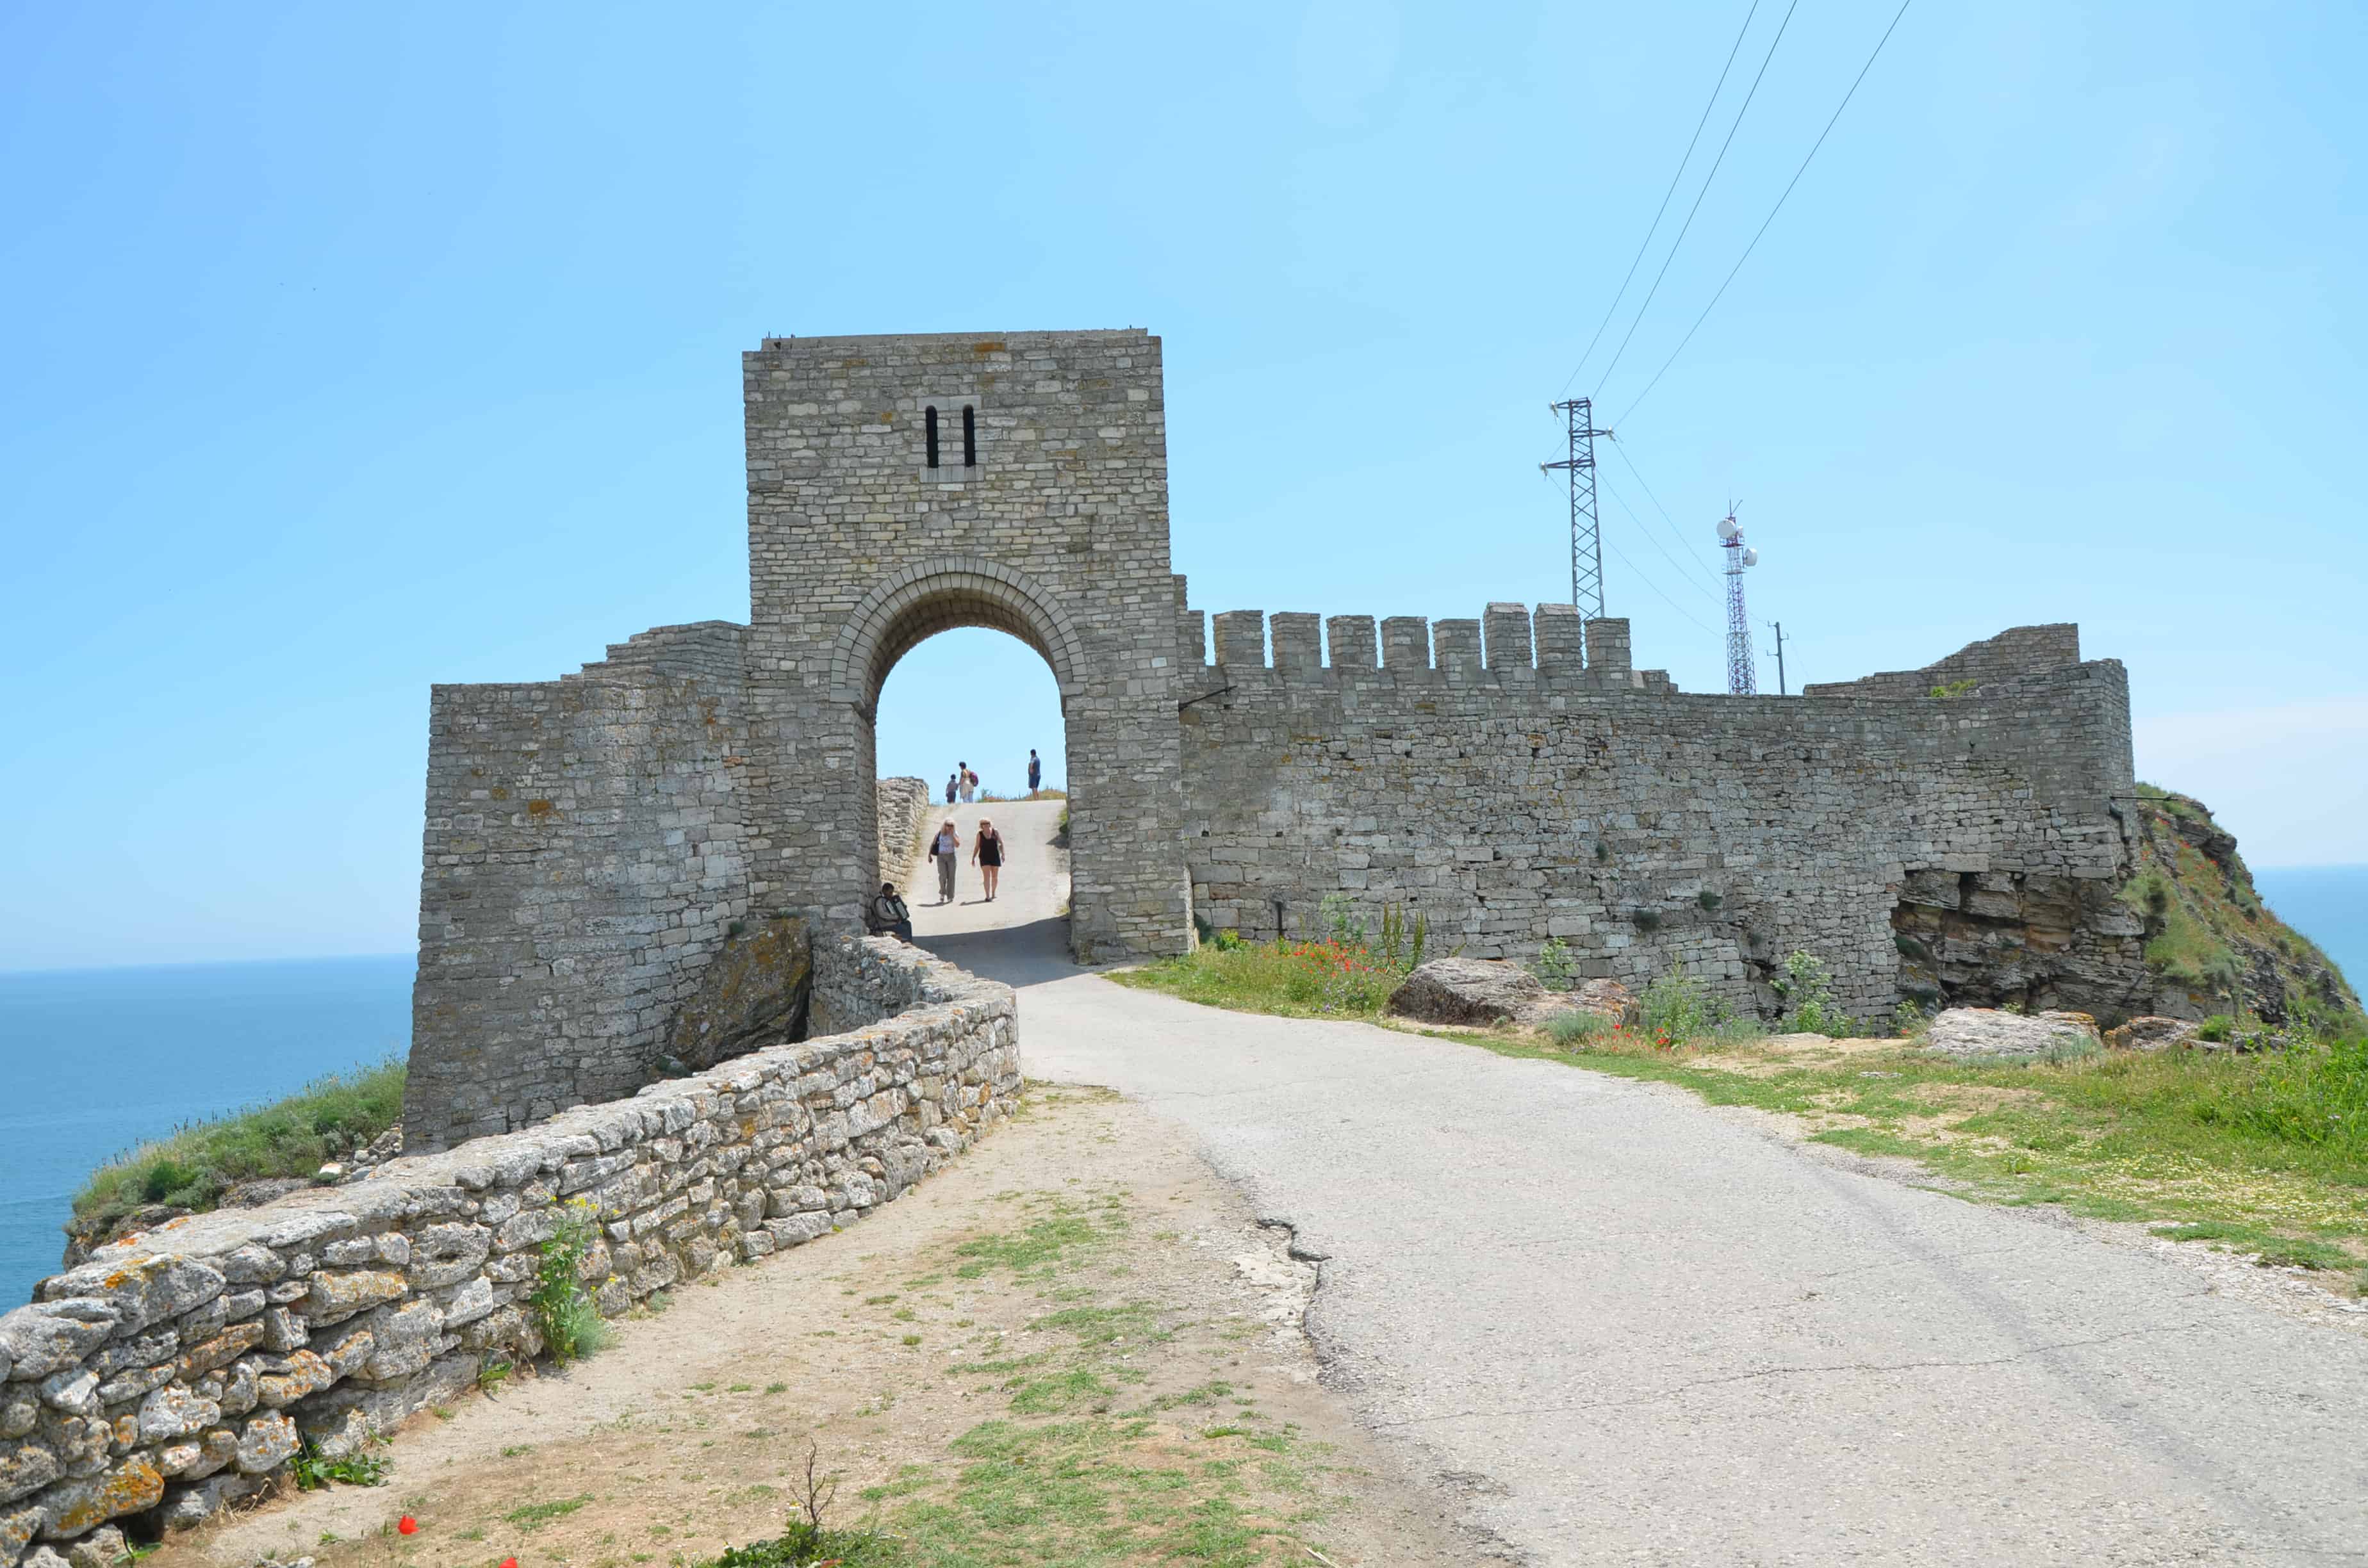 Approaching the third defensive wall at Kaliakra, Bulgaria